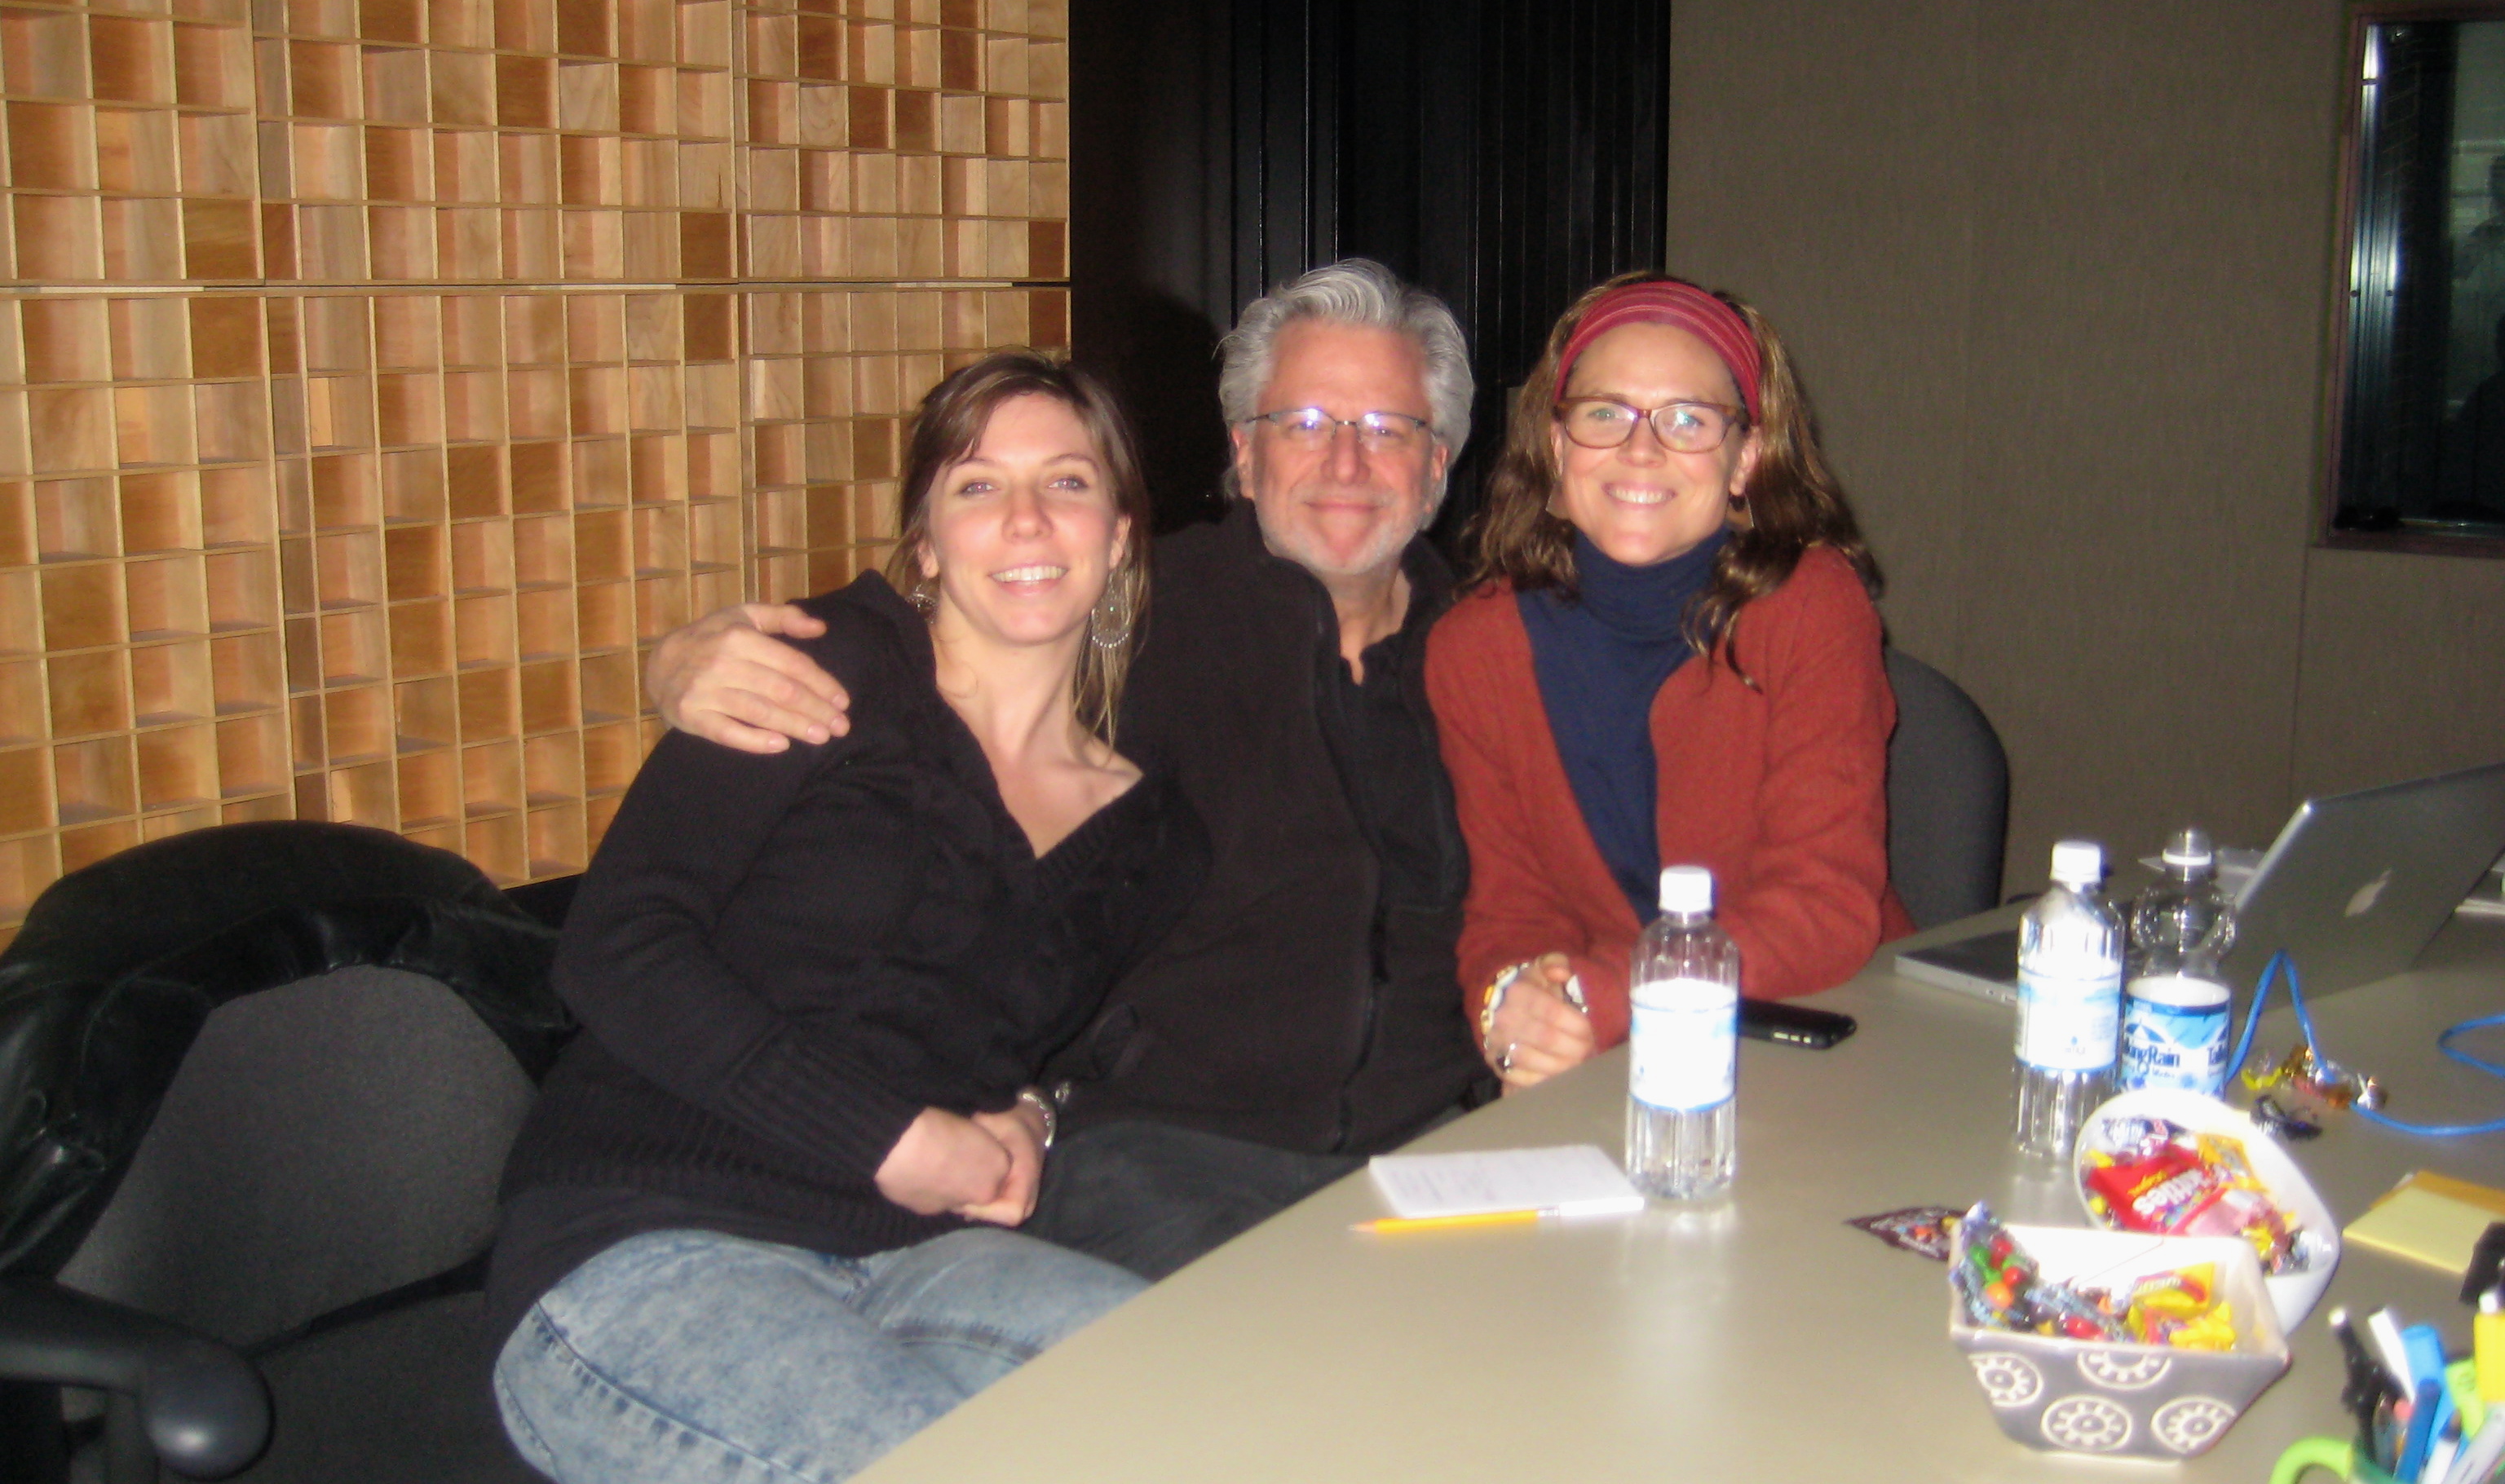 Sophie Harris, Geof Bartz, Irene Taylor Brodsky at the mix of SAVING PELICAN 895 in Portland, Oregon January 2011.